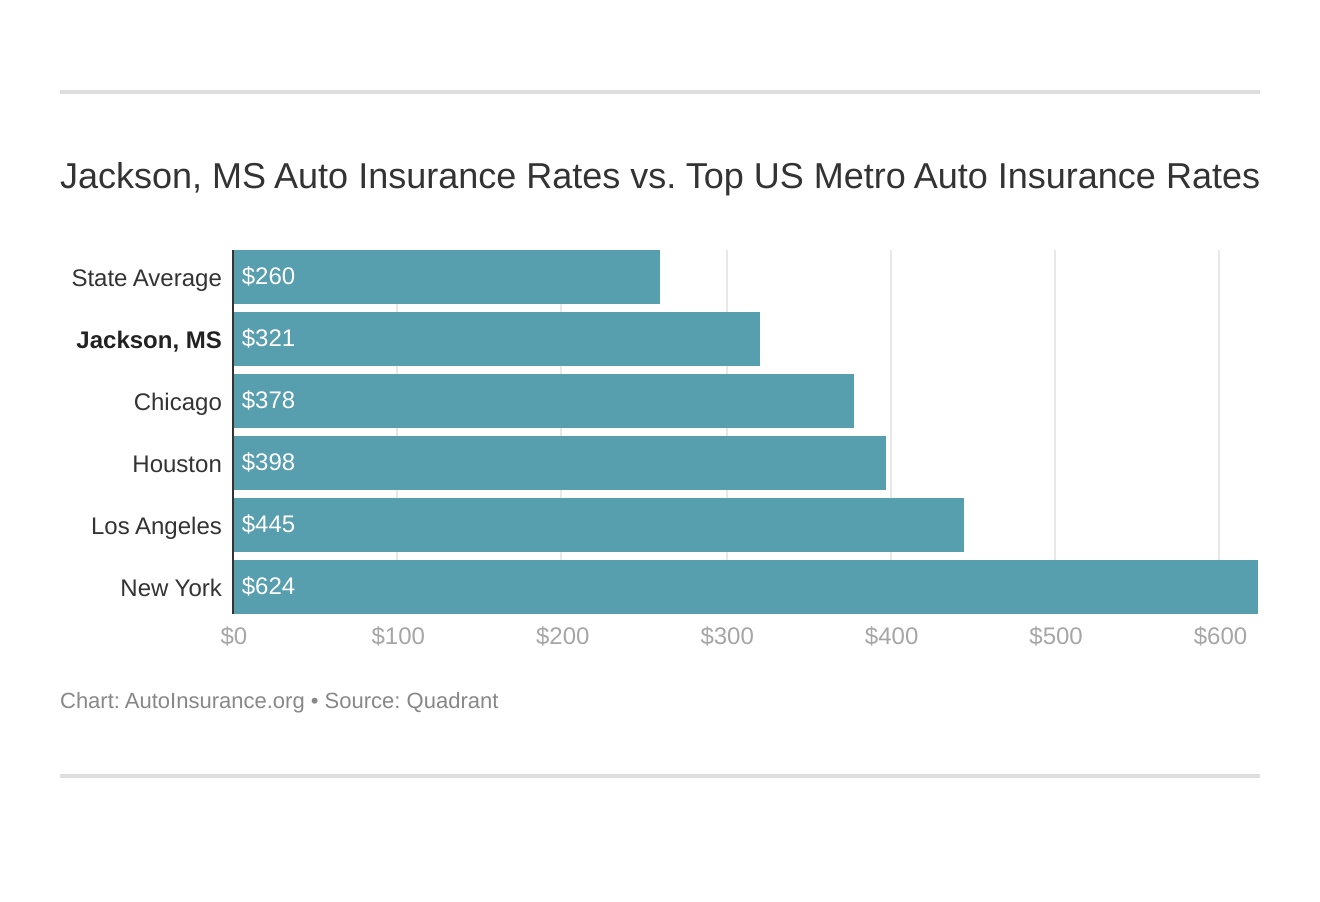 Jackson, MS Auto Insurance Rates vs. Top US Metro Auto Insurance Rates